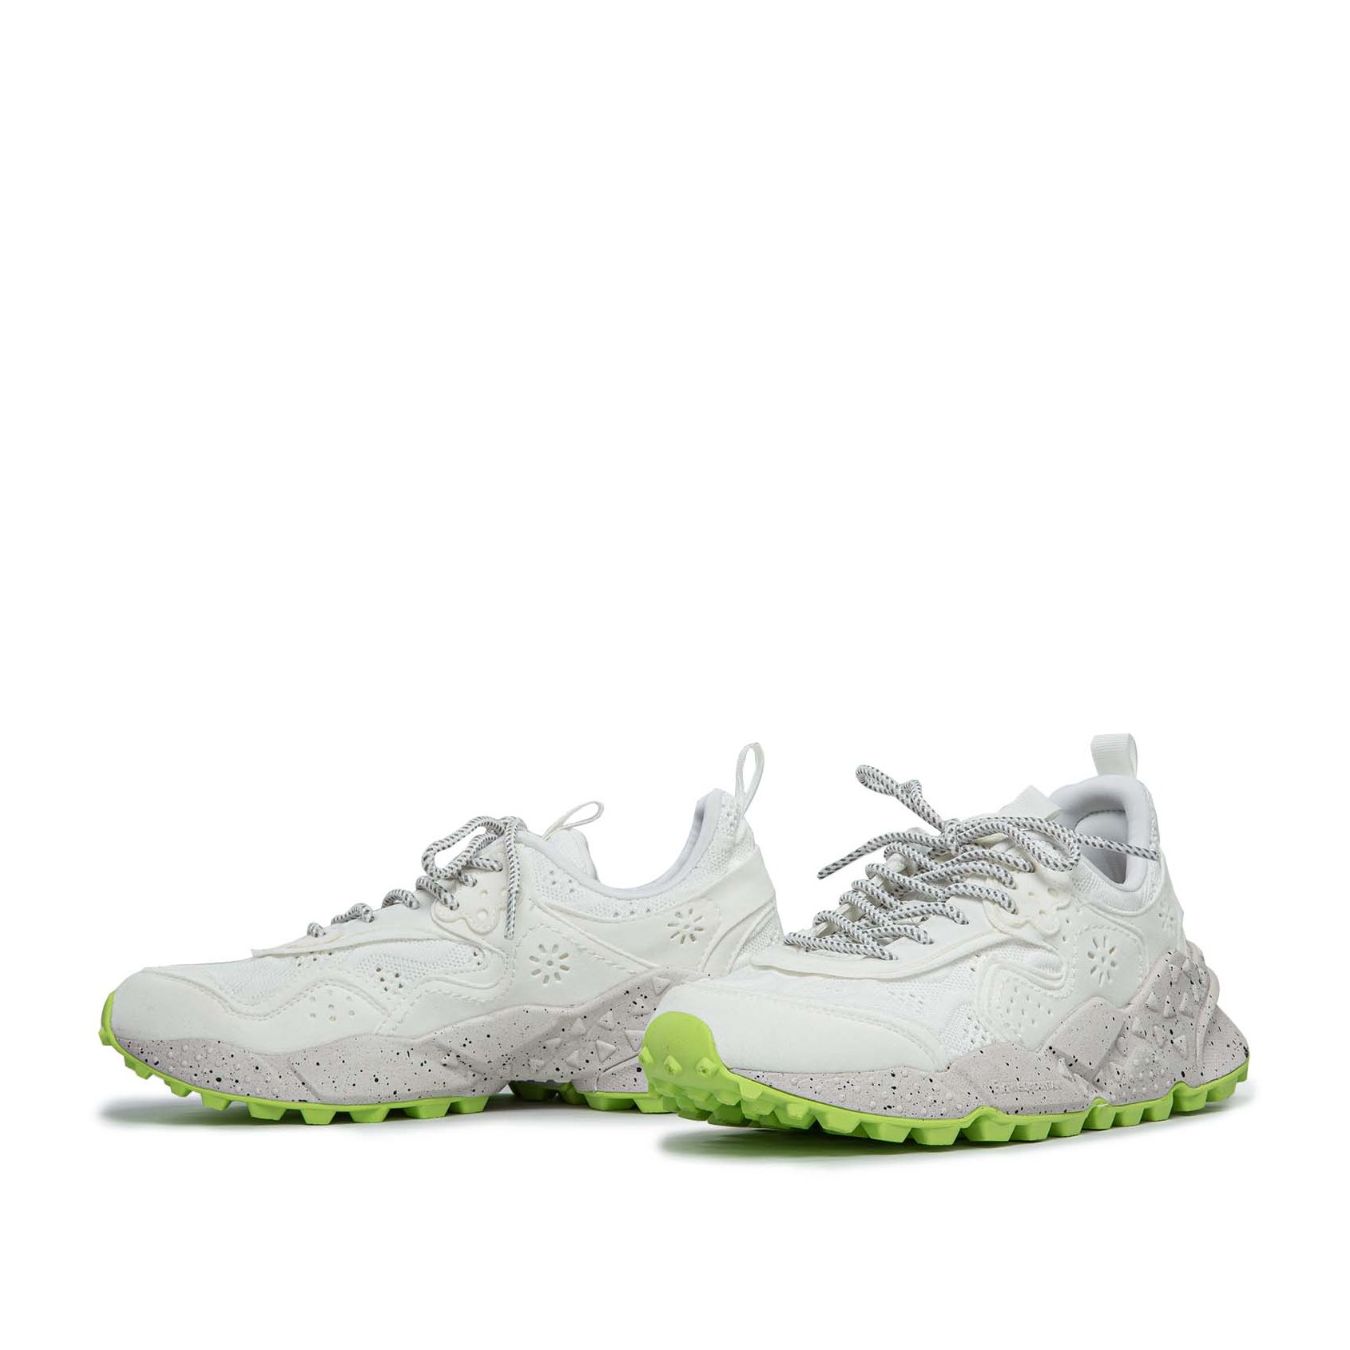 sneakers grigia e bianca suola verde